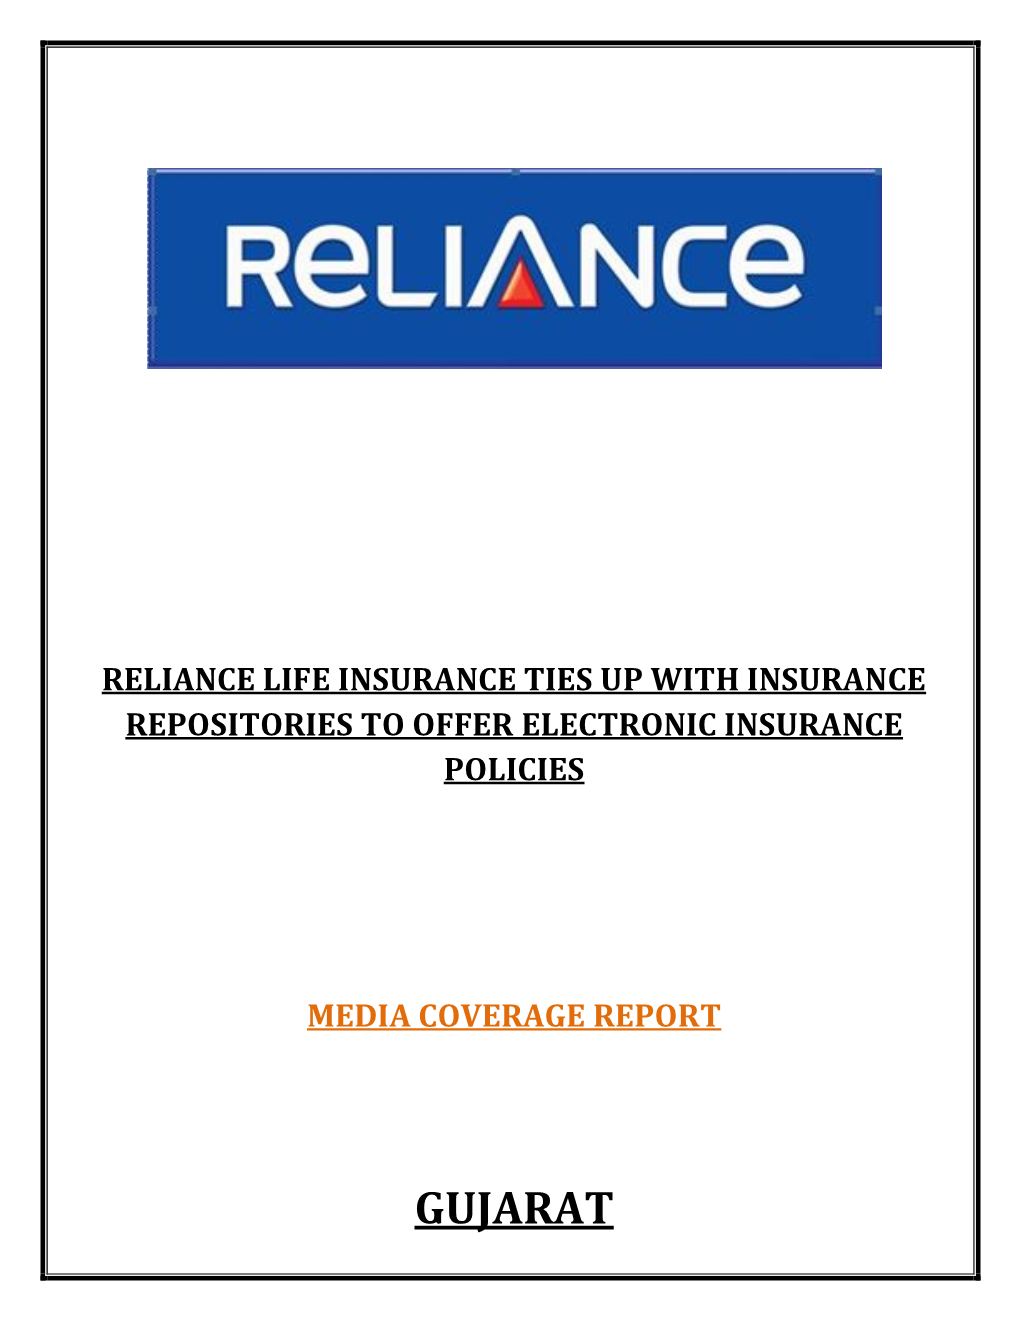 RLI-Electronic Insurance Coverage Report-Gujarat